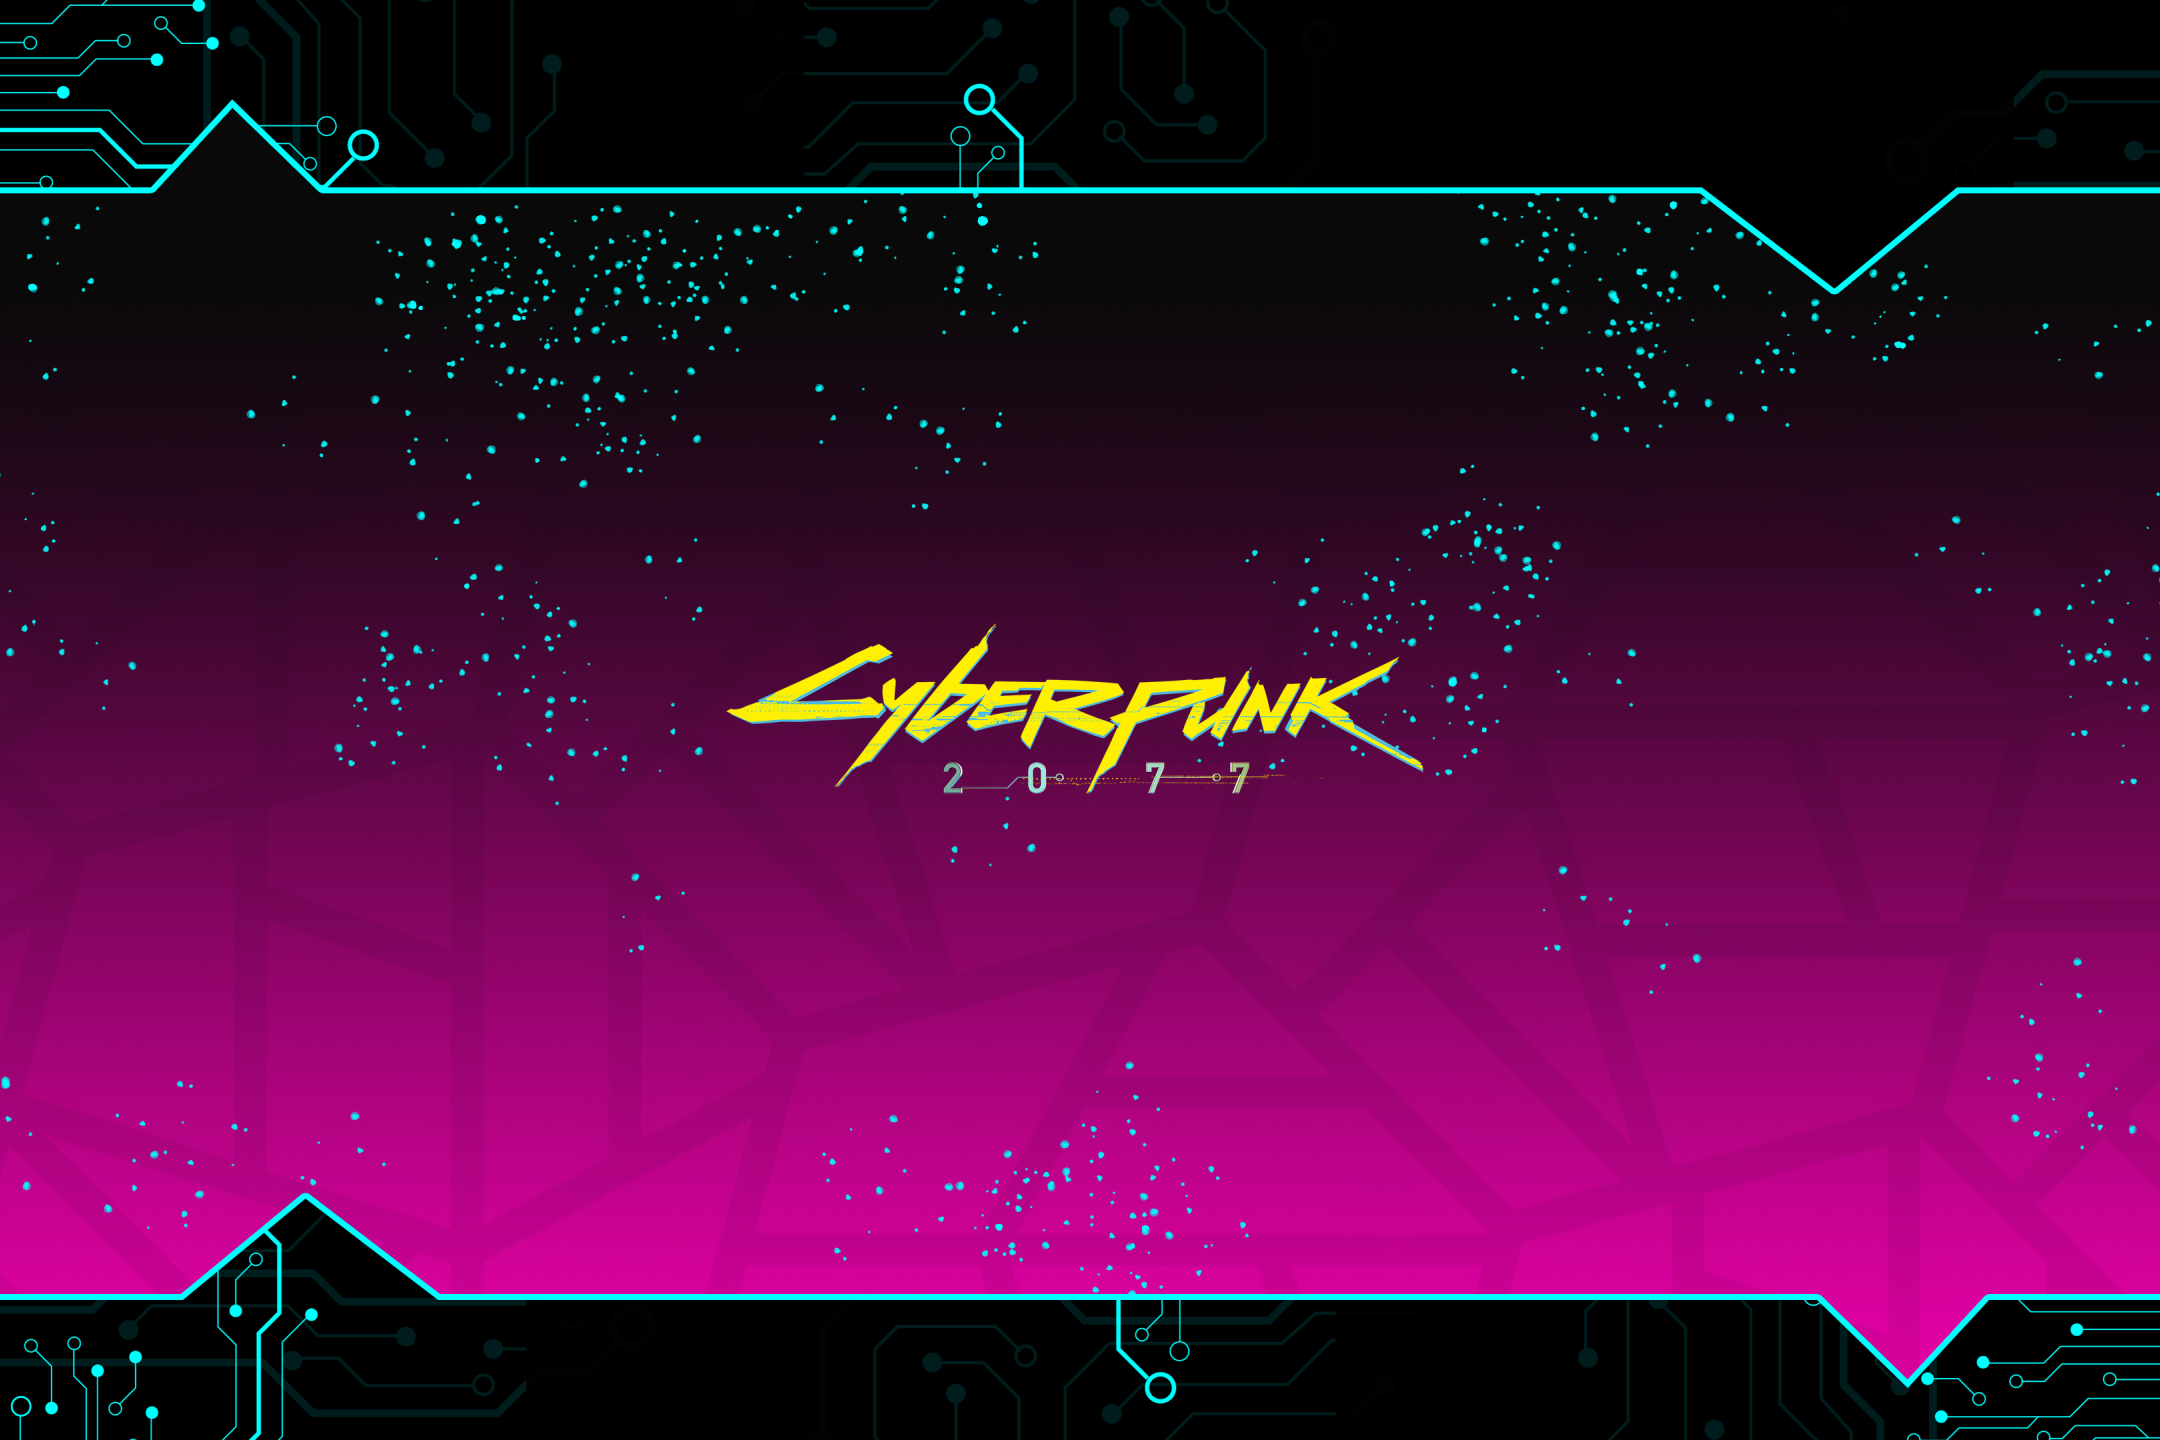 Cyberpunk logo wallpaper фото 56